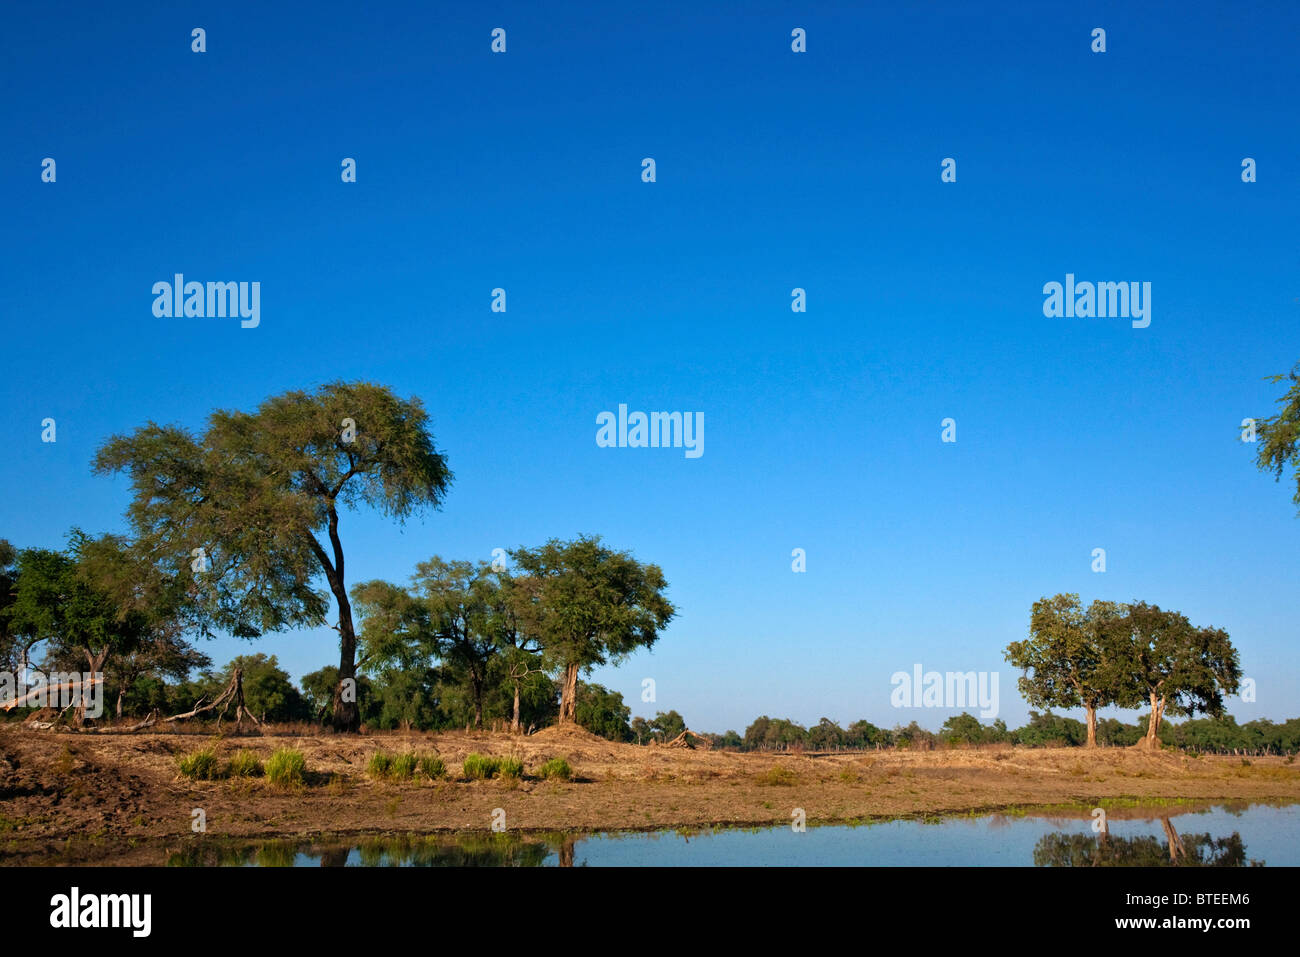 Bushveld scene showing a seasonal pan and distant Albida trees Stock Photo